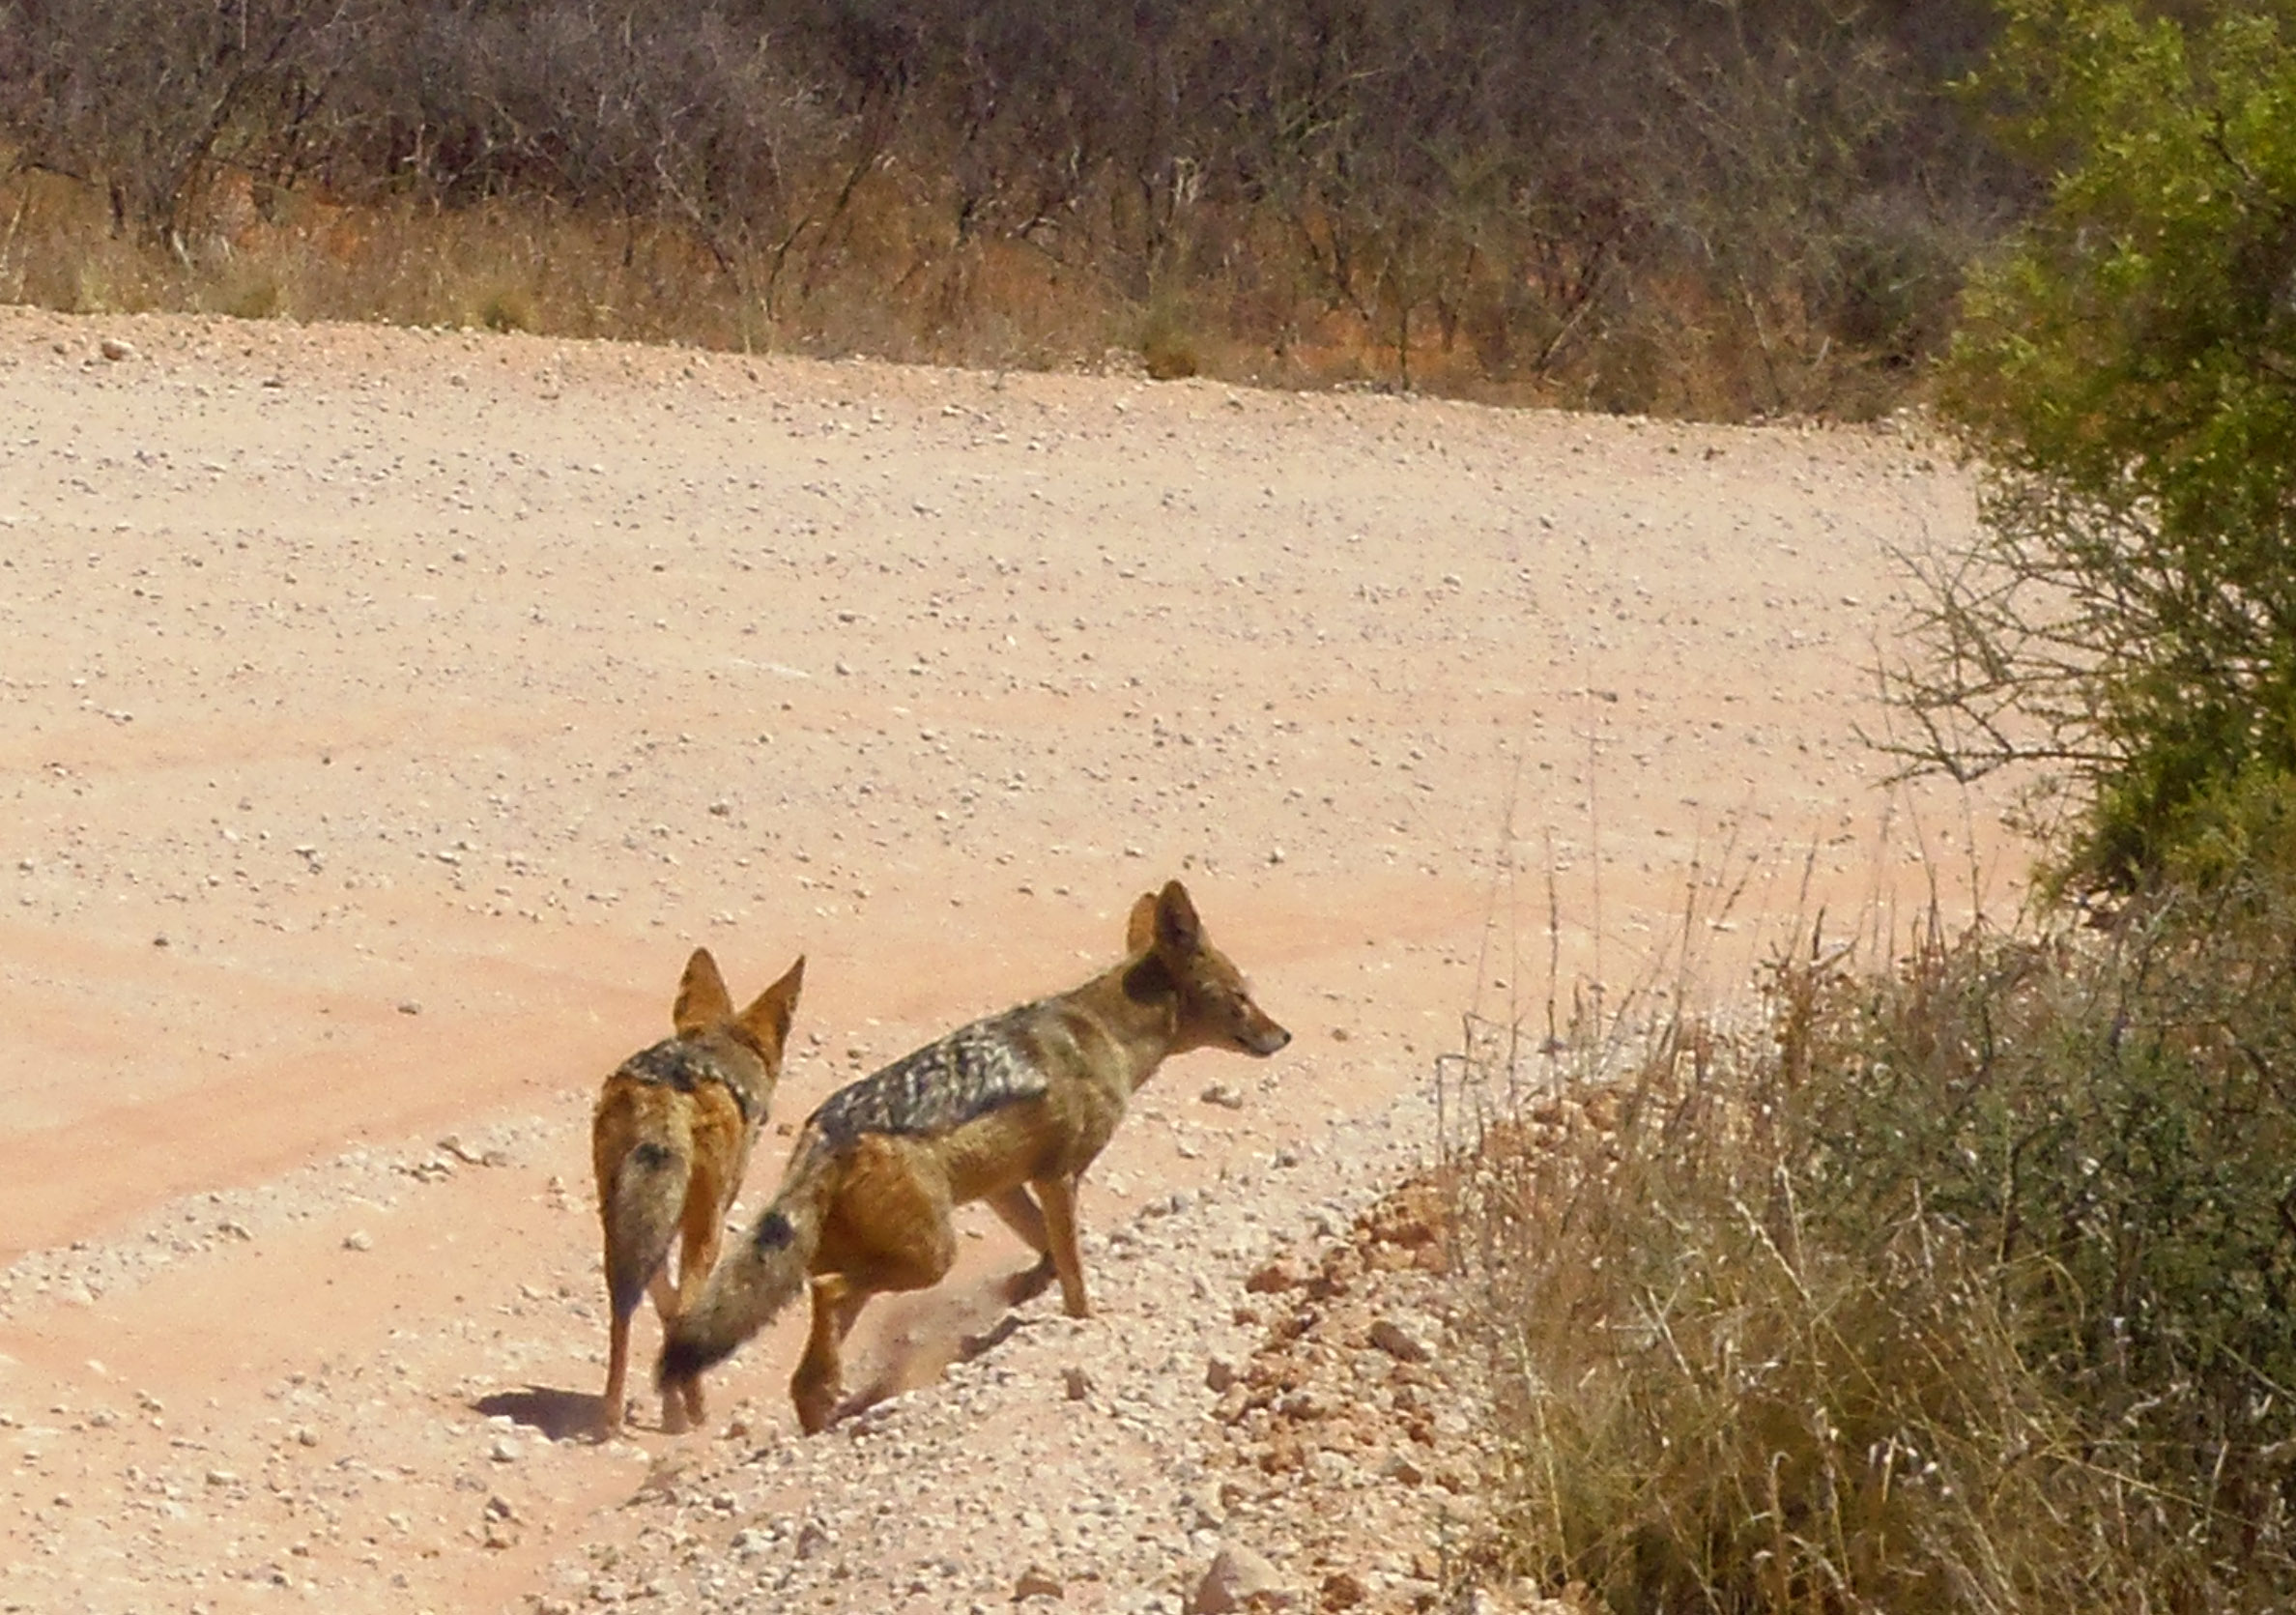 Jackals on the road in the Kalahari